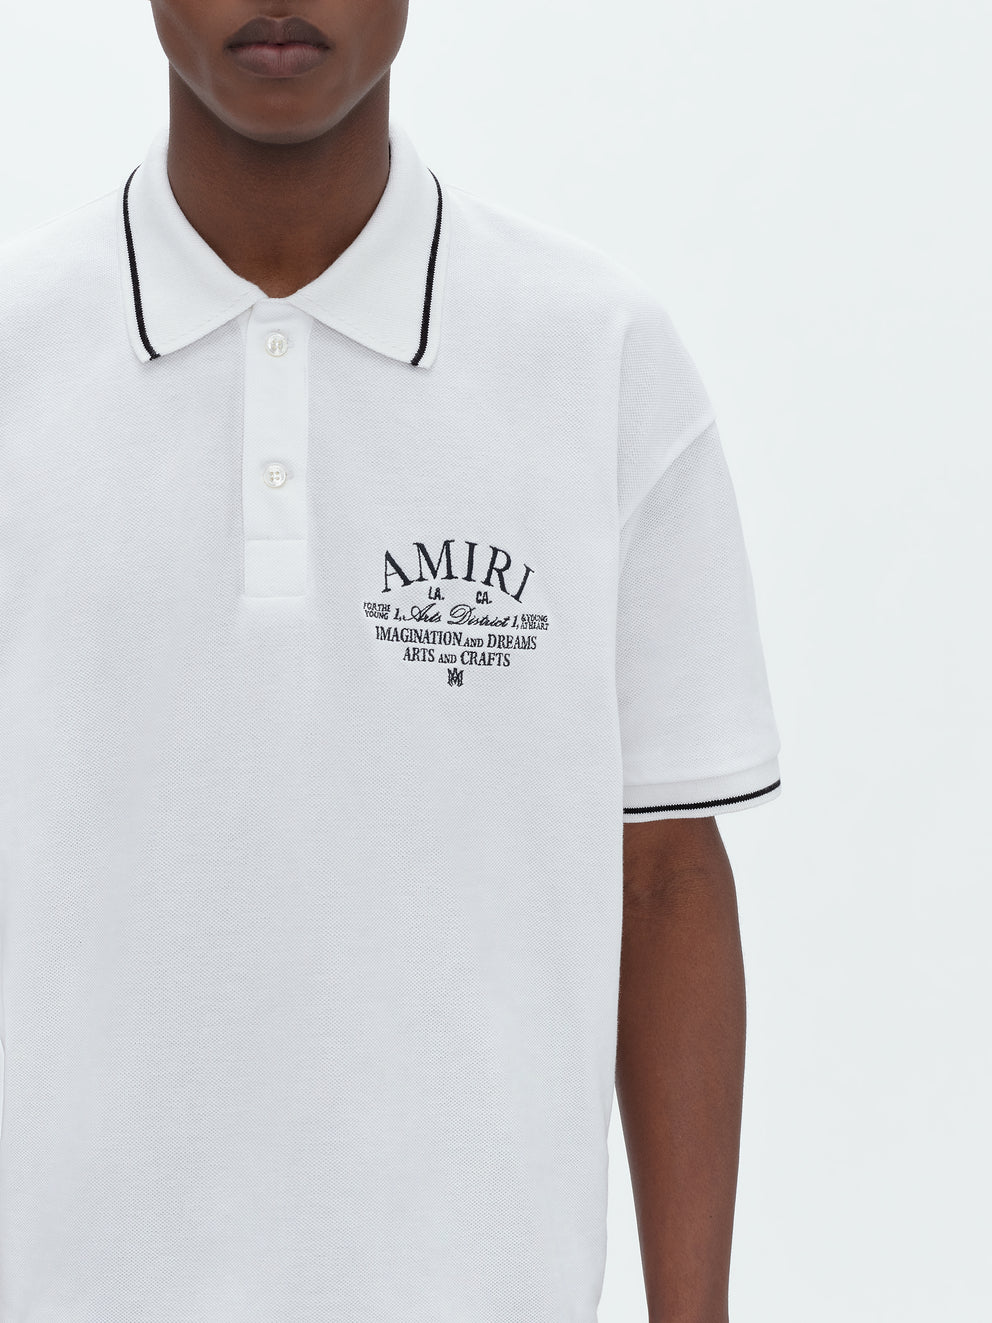 Camisas Amiri Arts District Pique Polo Hombre Blancas | 9483RPWUD